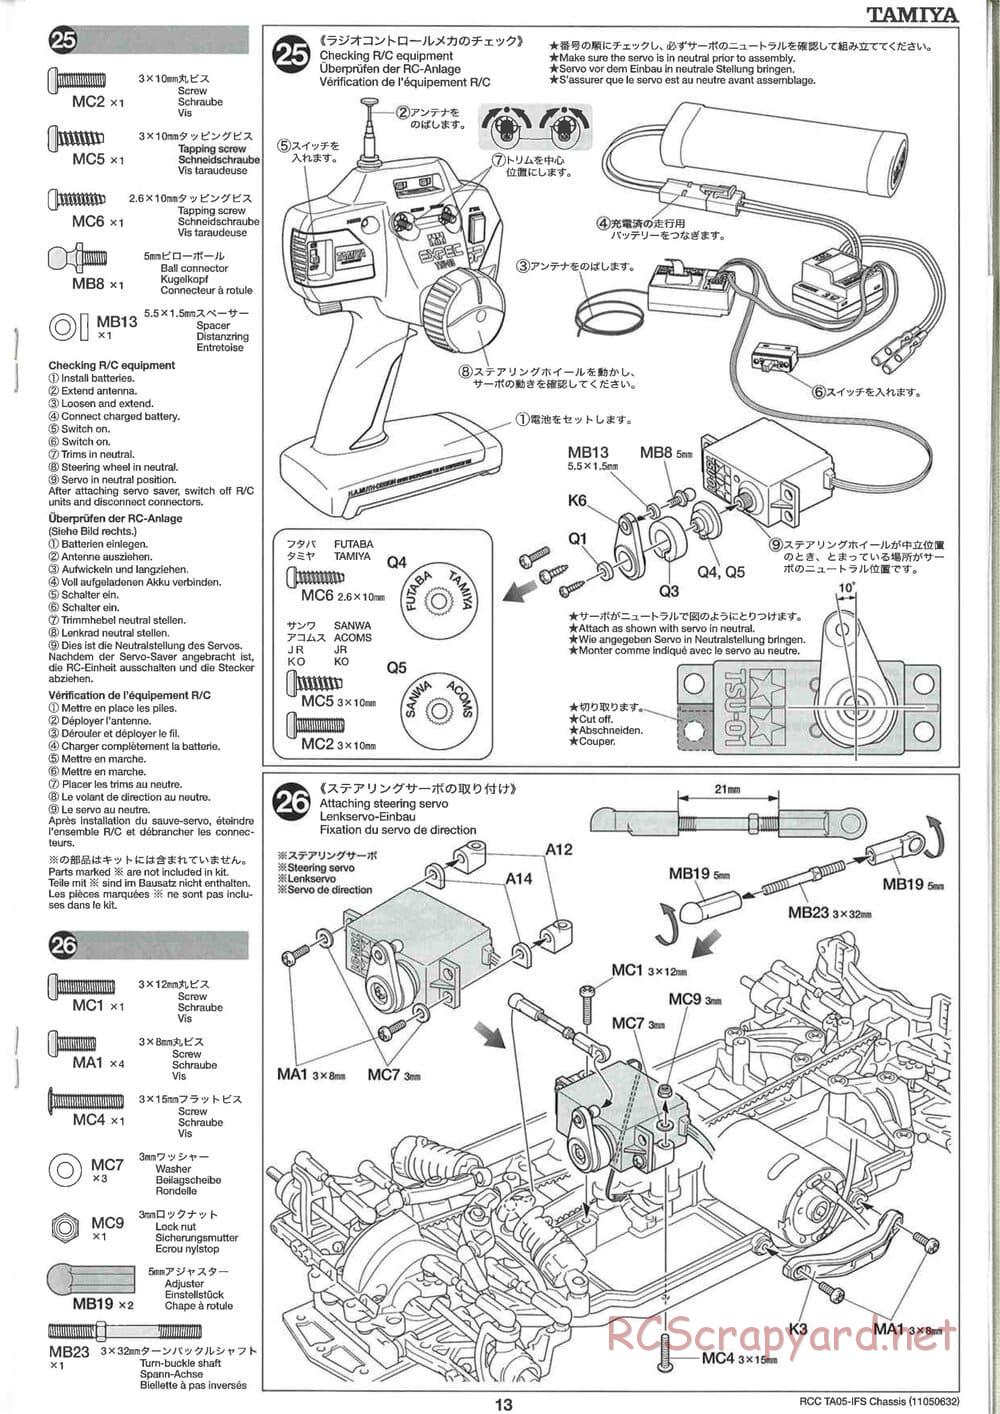 Tamiya - TA05-IFS Chassis - Manual - Page 13